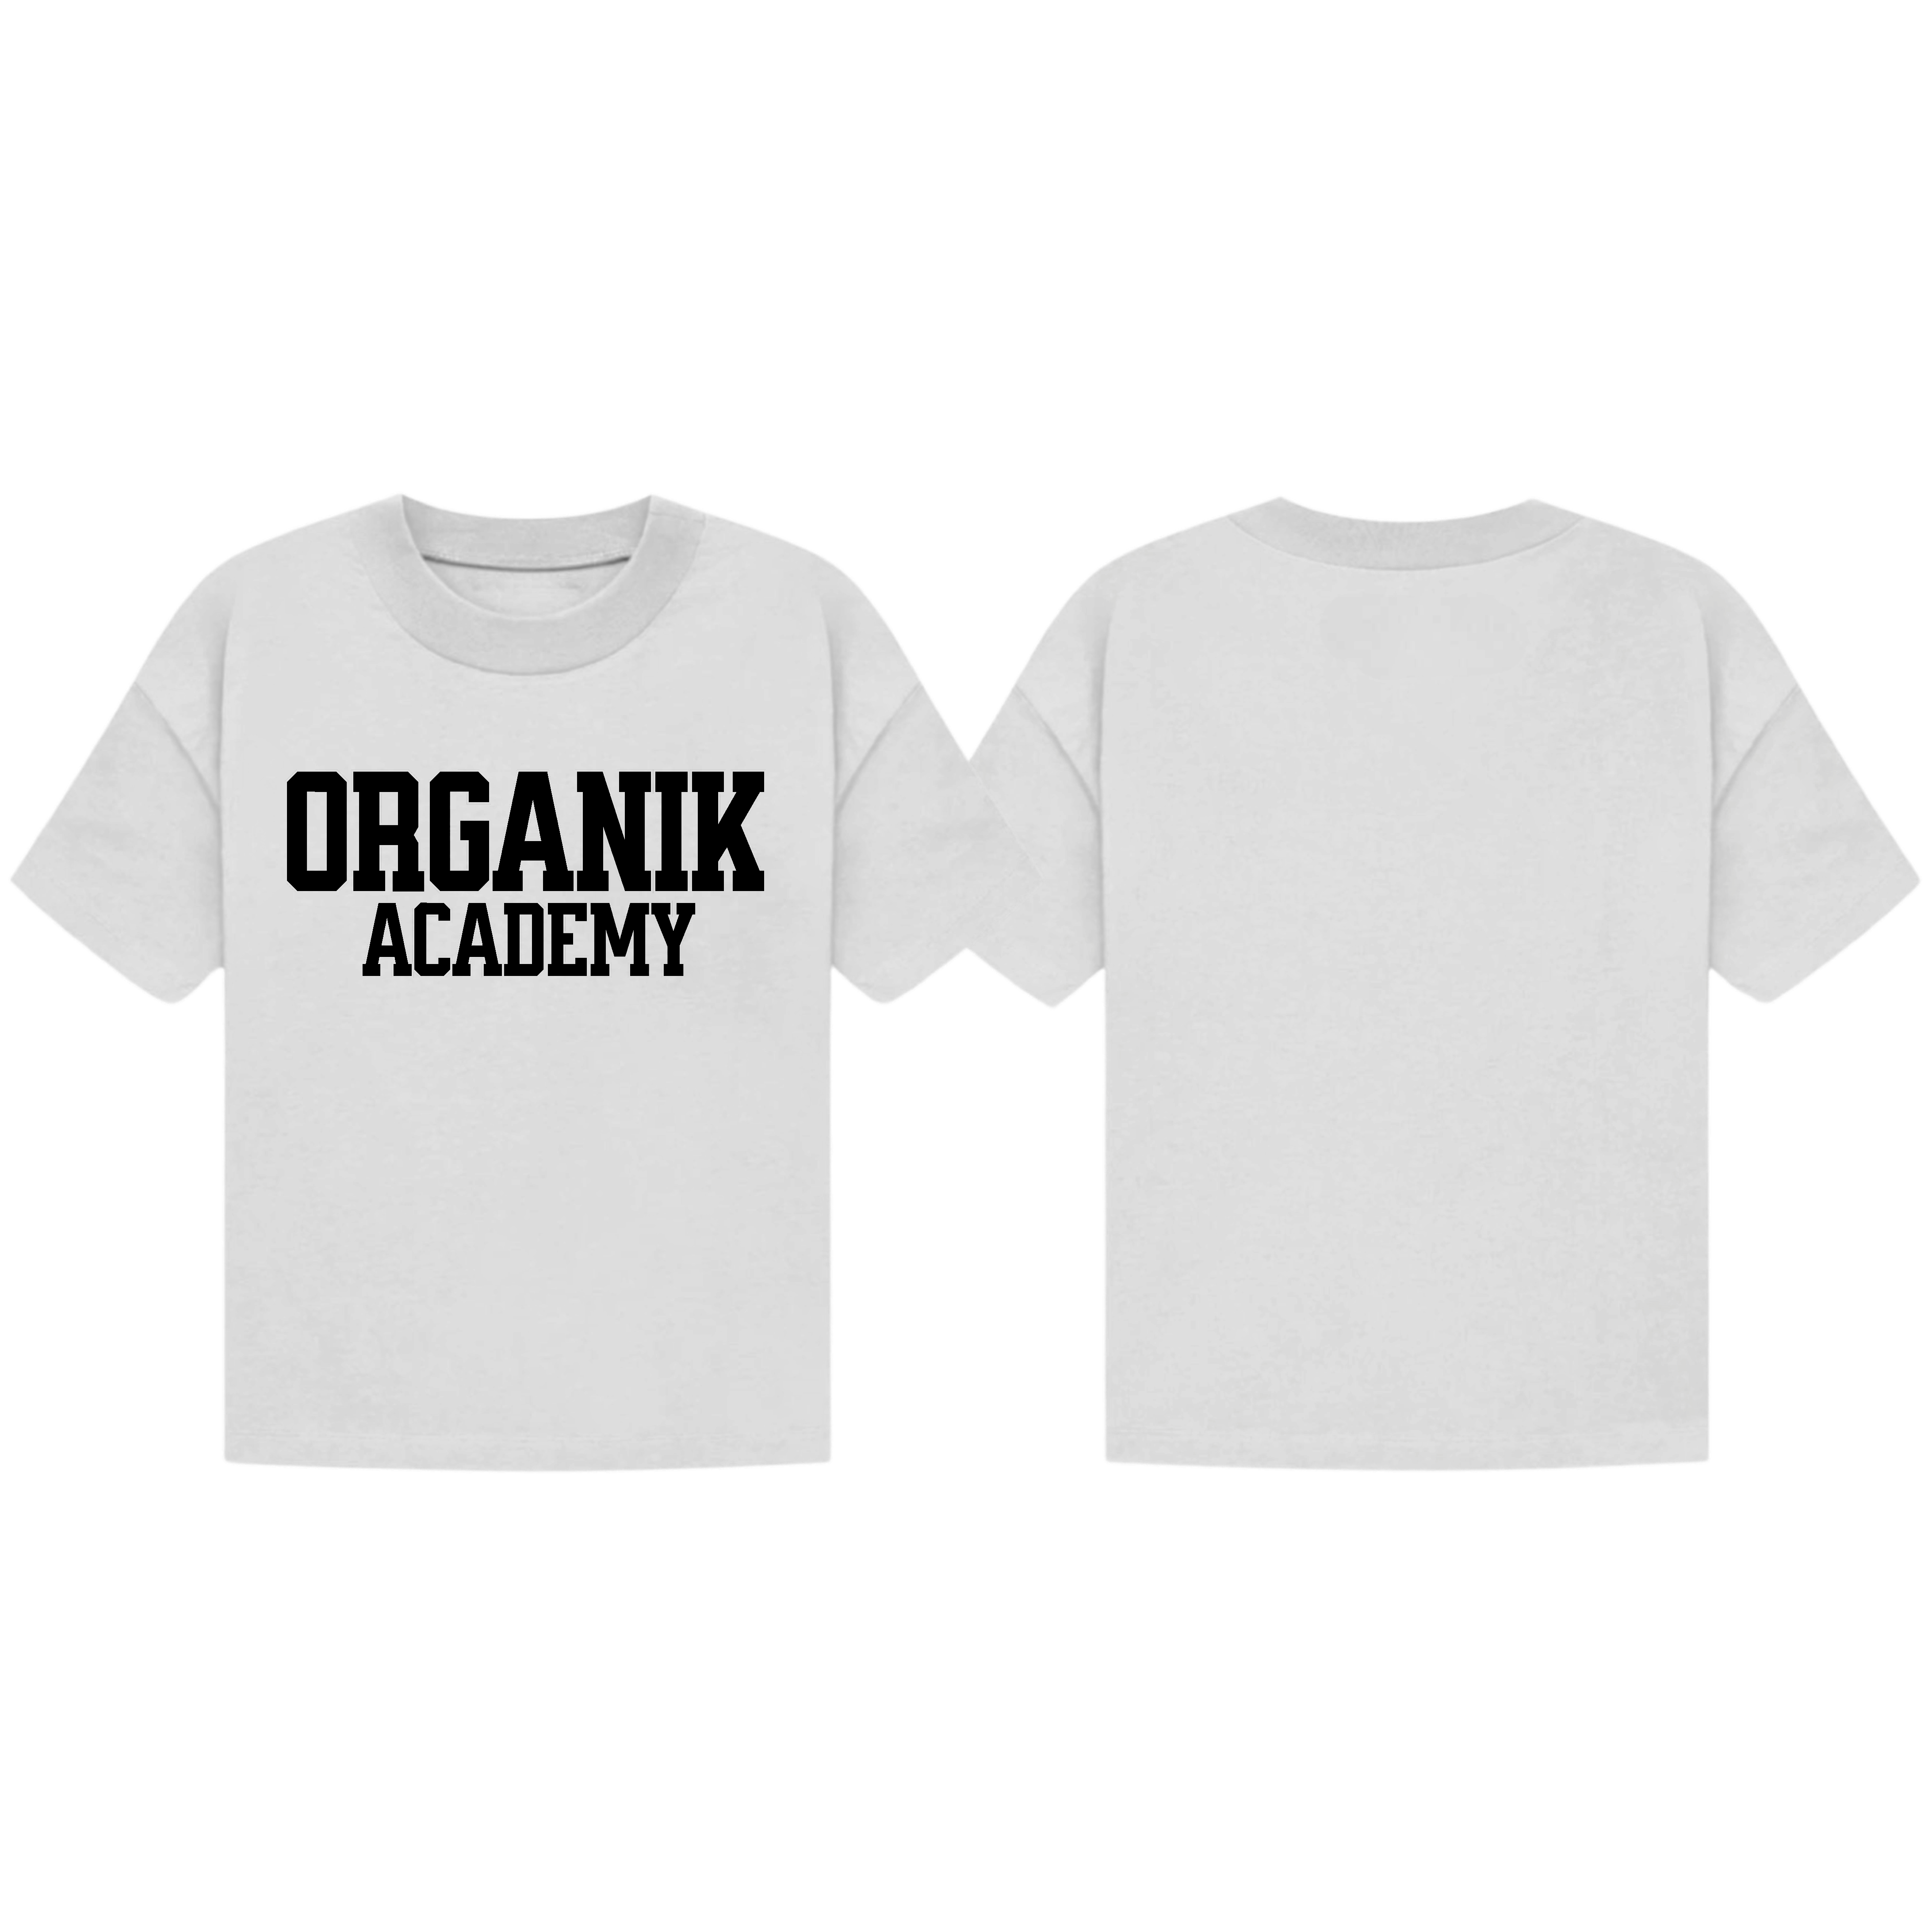 Organik Academy - Classic T-Shirt